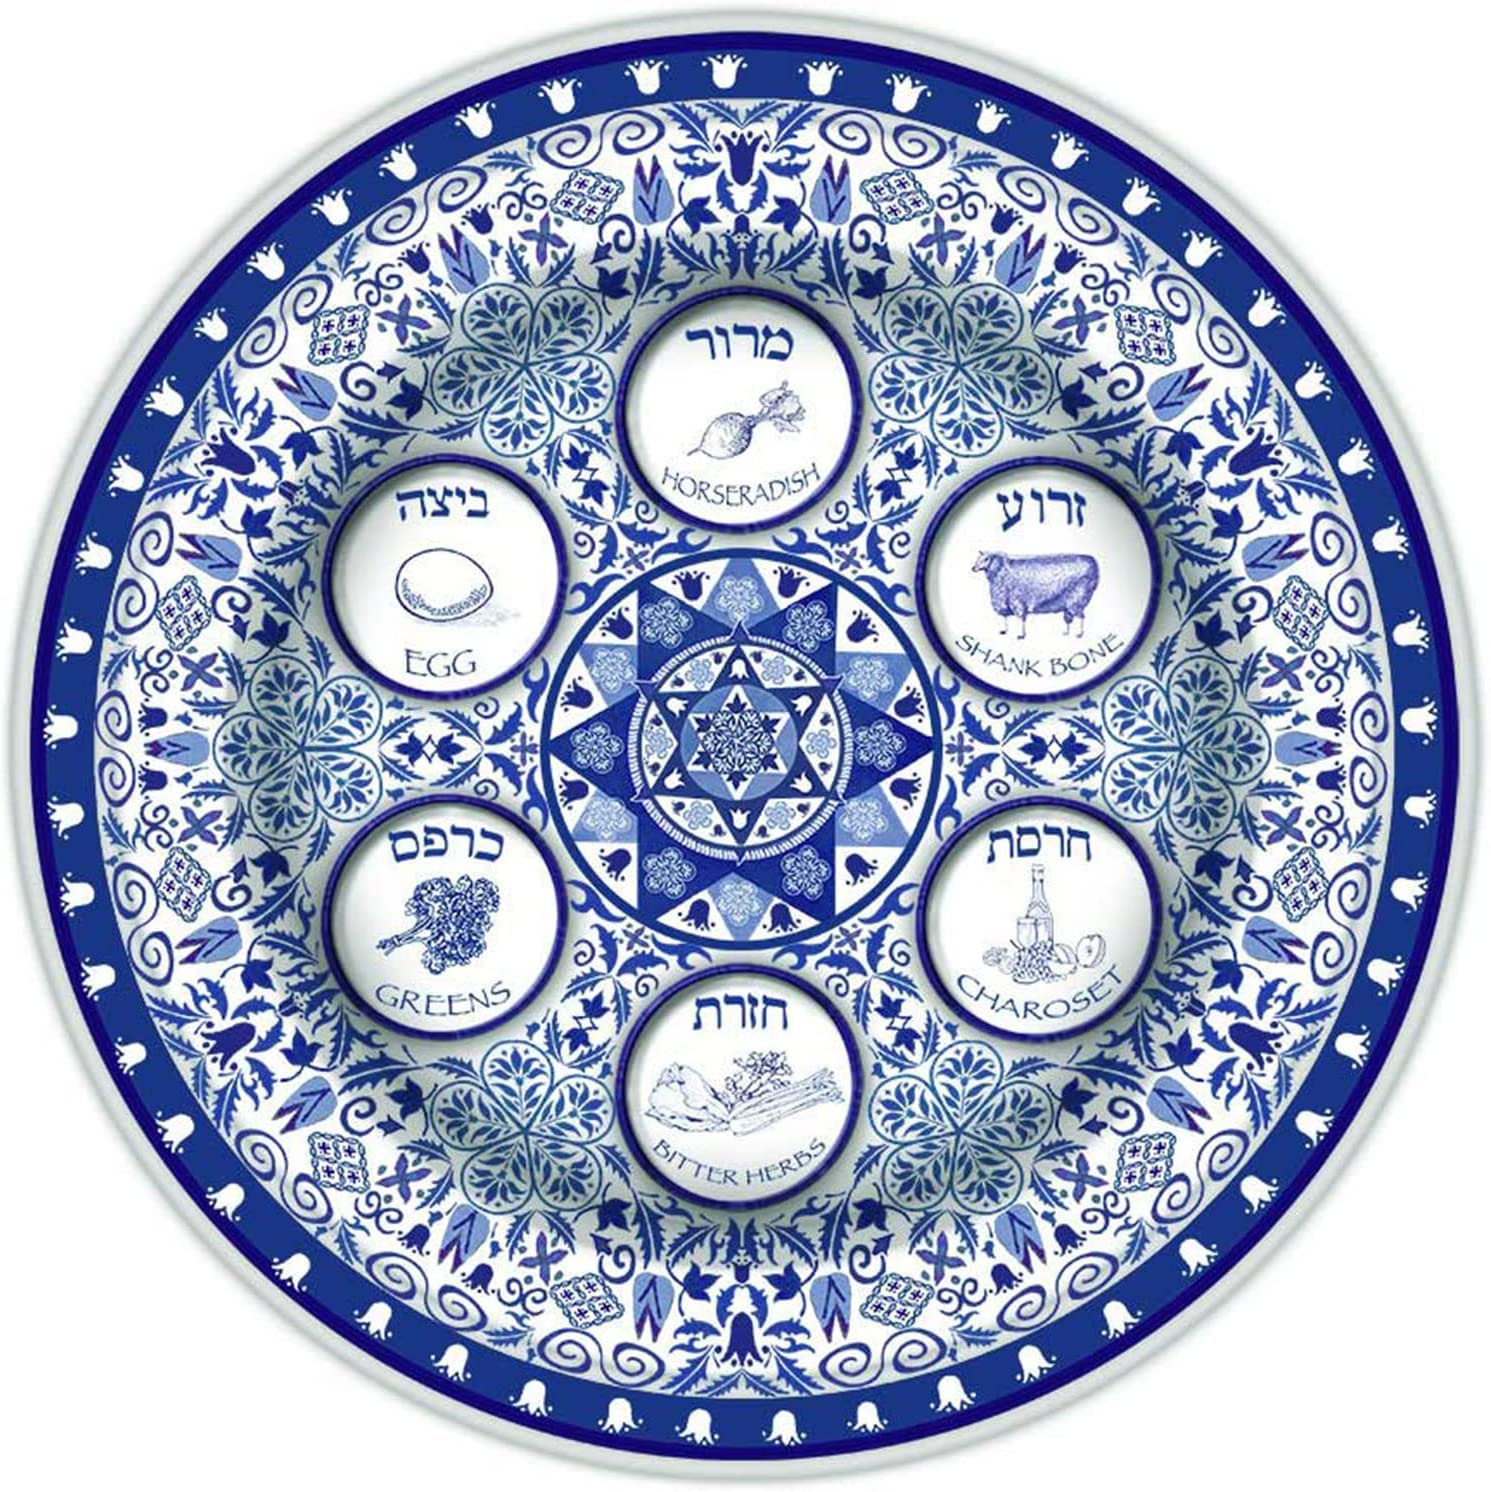 Exquisite Renaissance Passover Seder Plate Porcelain Floral Ornate Design - 13\